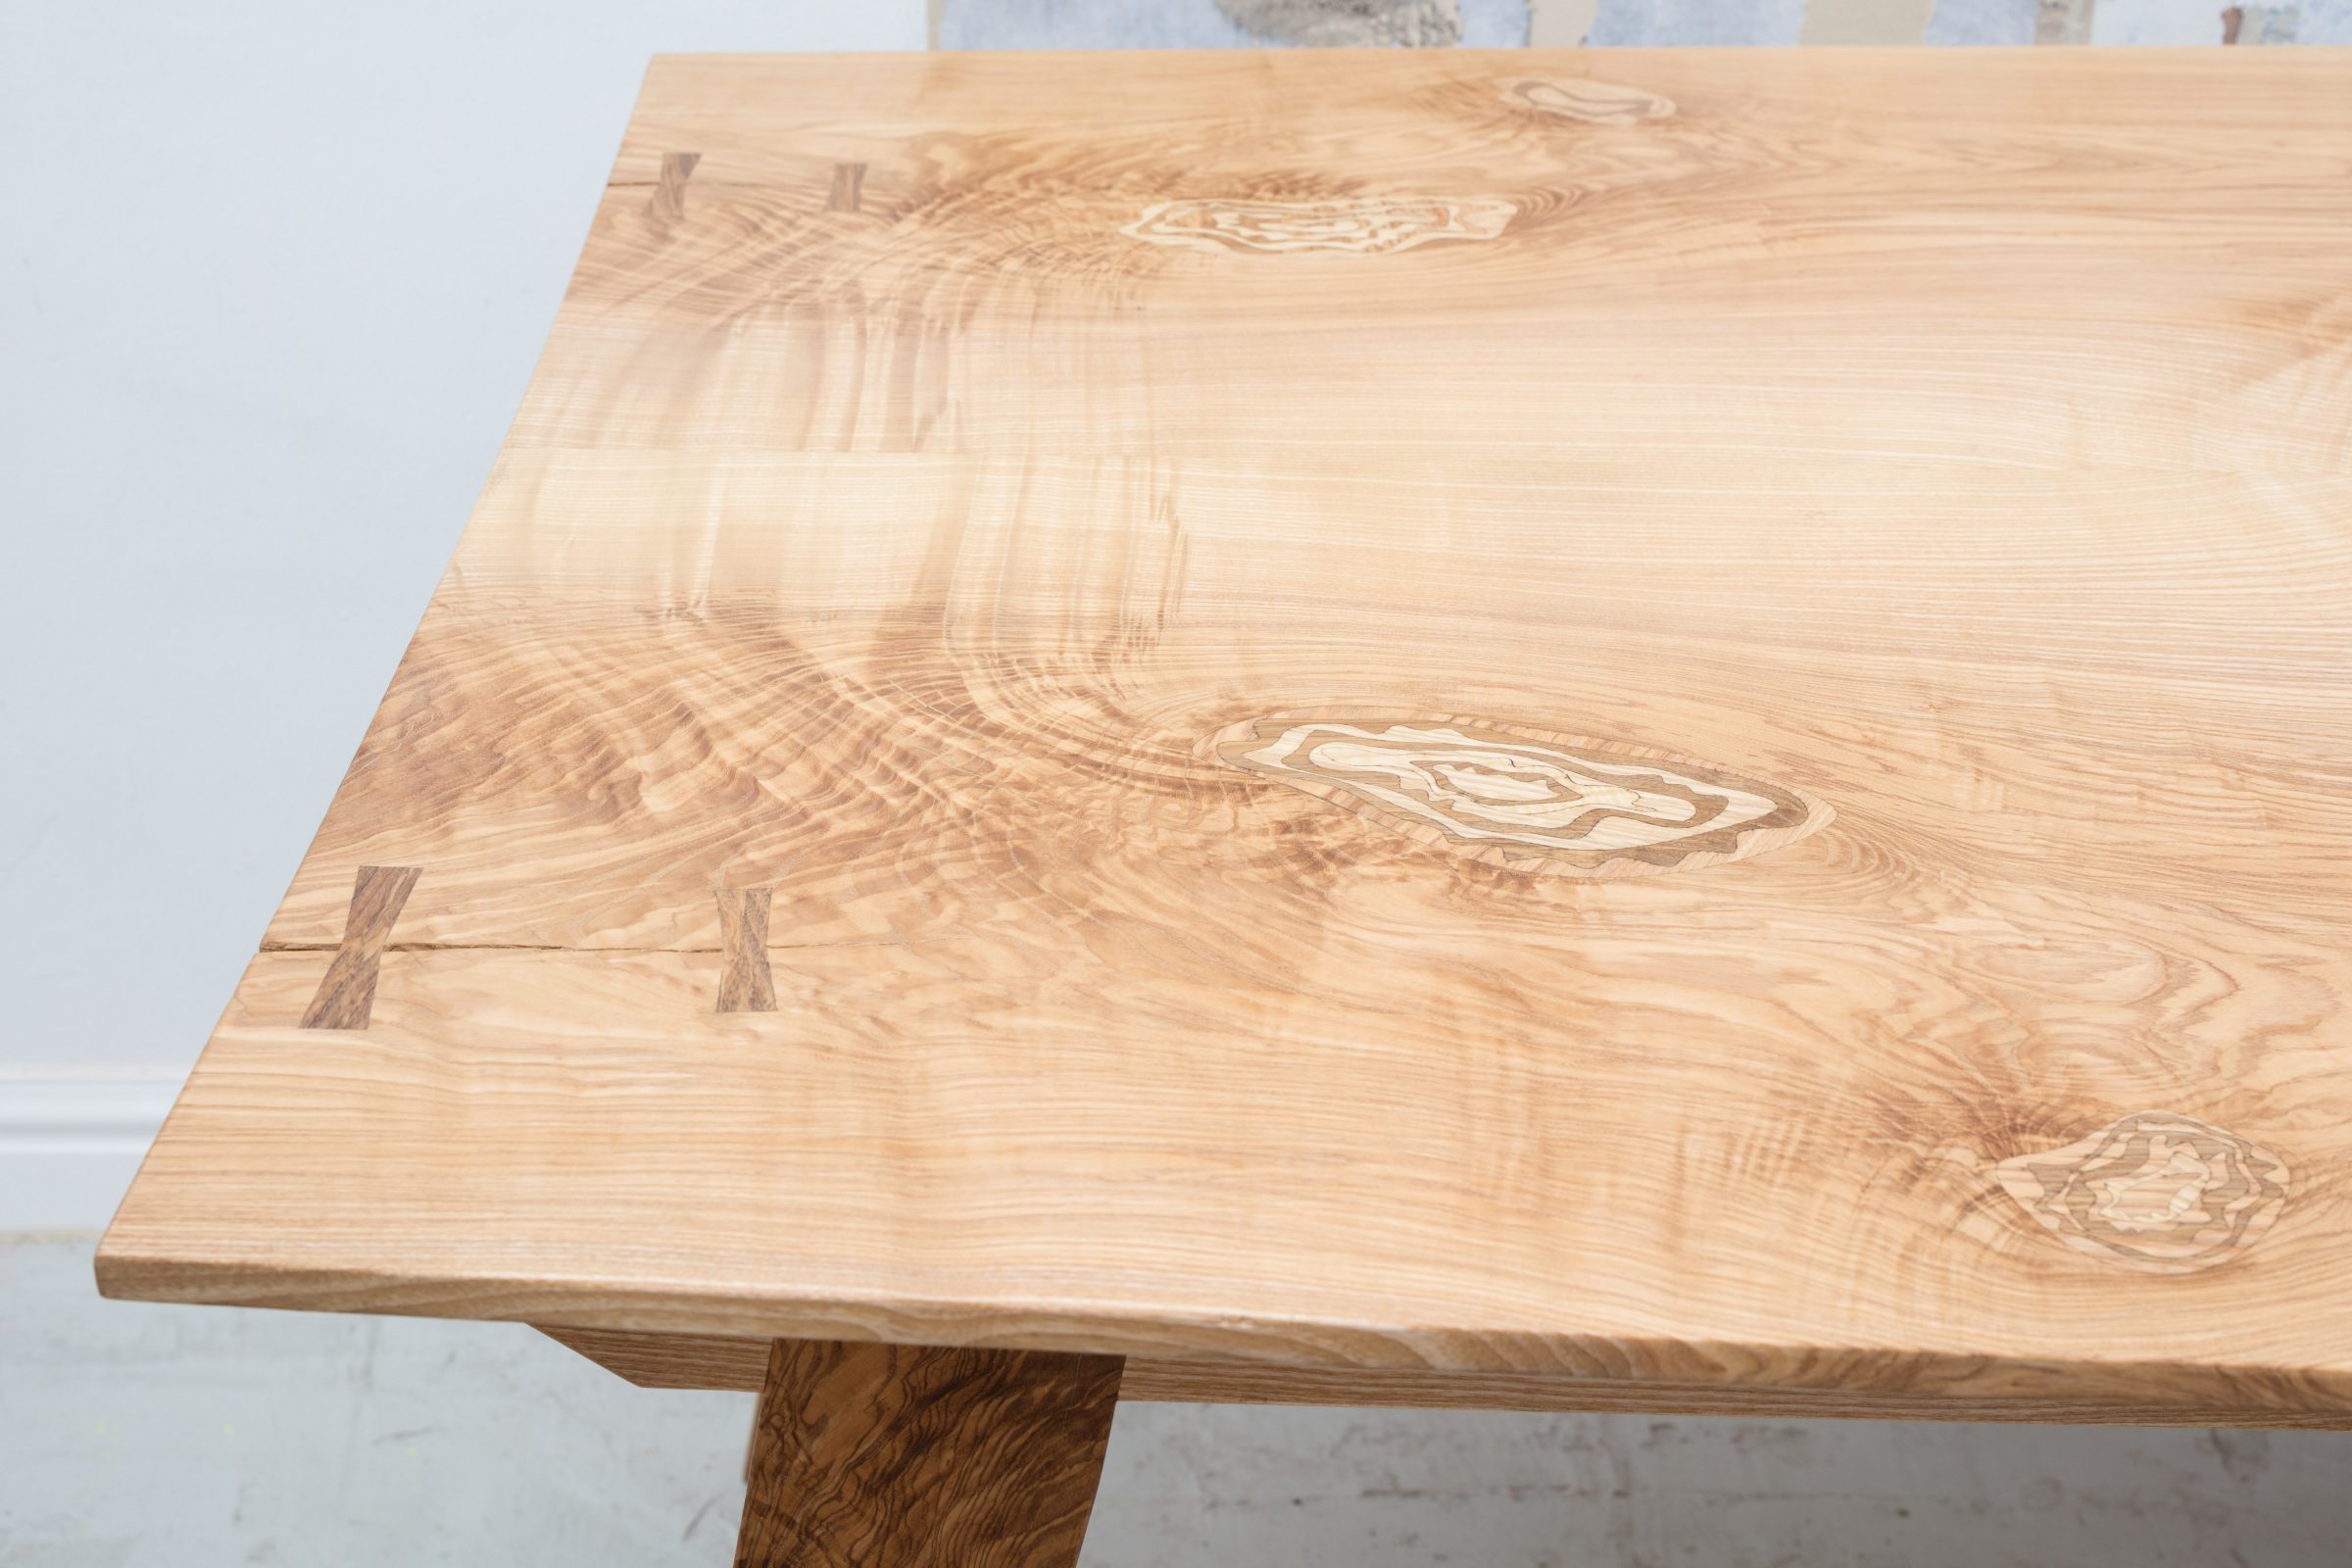 Jan Hendzel Studio olive ash table marquetry-4